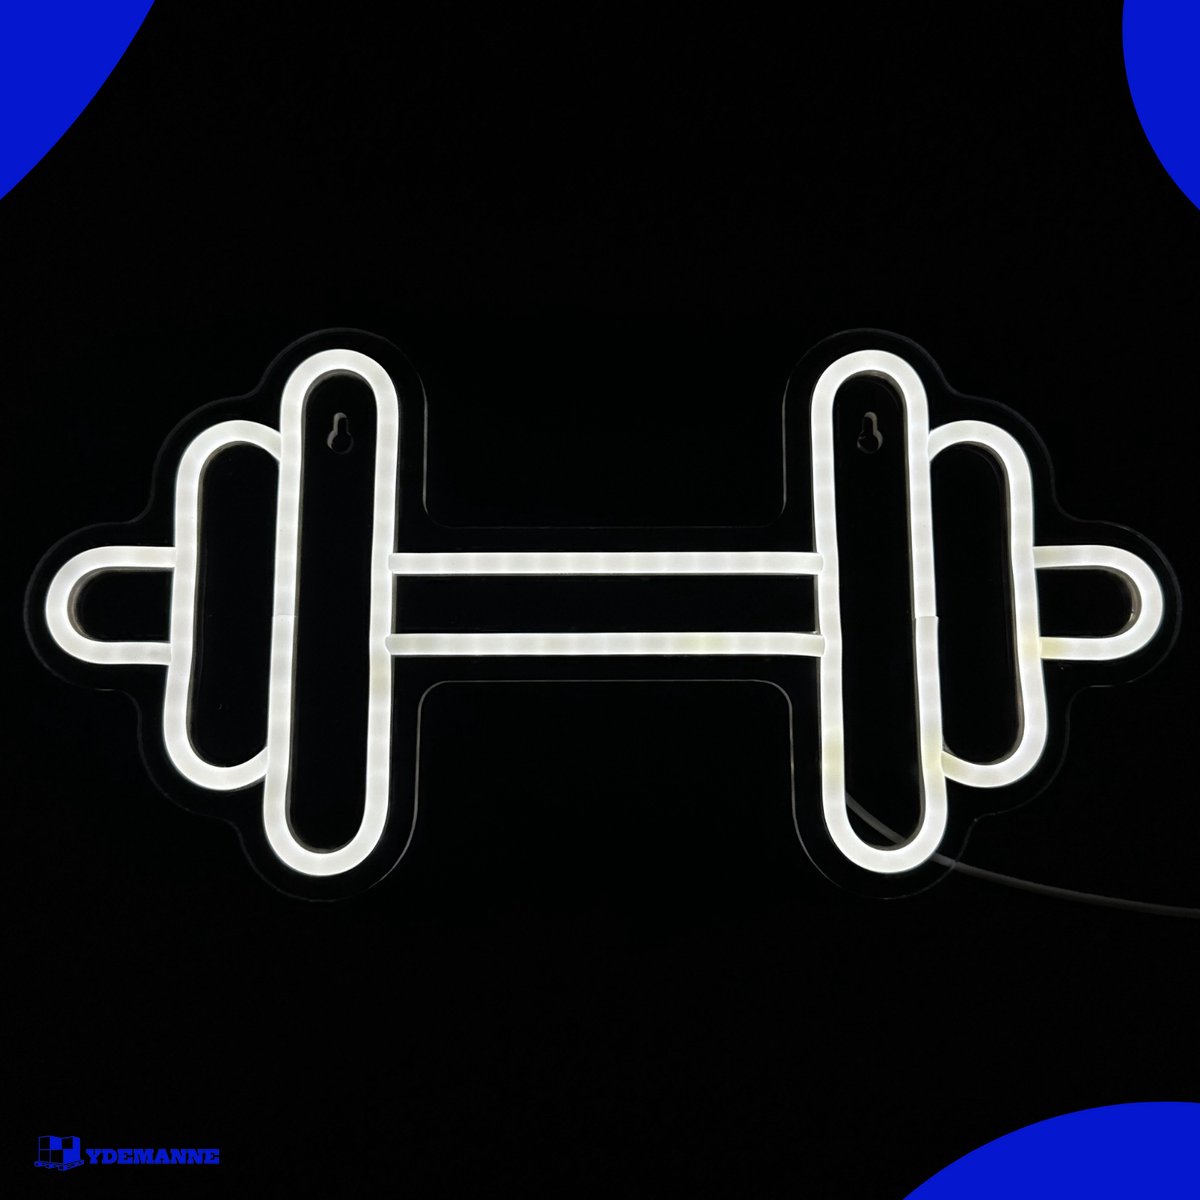 Neon Lamp - Dumbbell - Fitness - Incl. Ophanghaakjes - Neon Sign - Neon Verlichting - Neon Led Lamp - Wandlamp